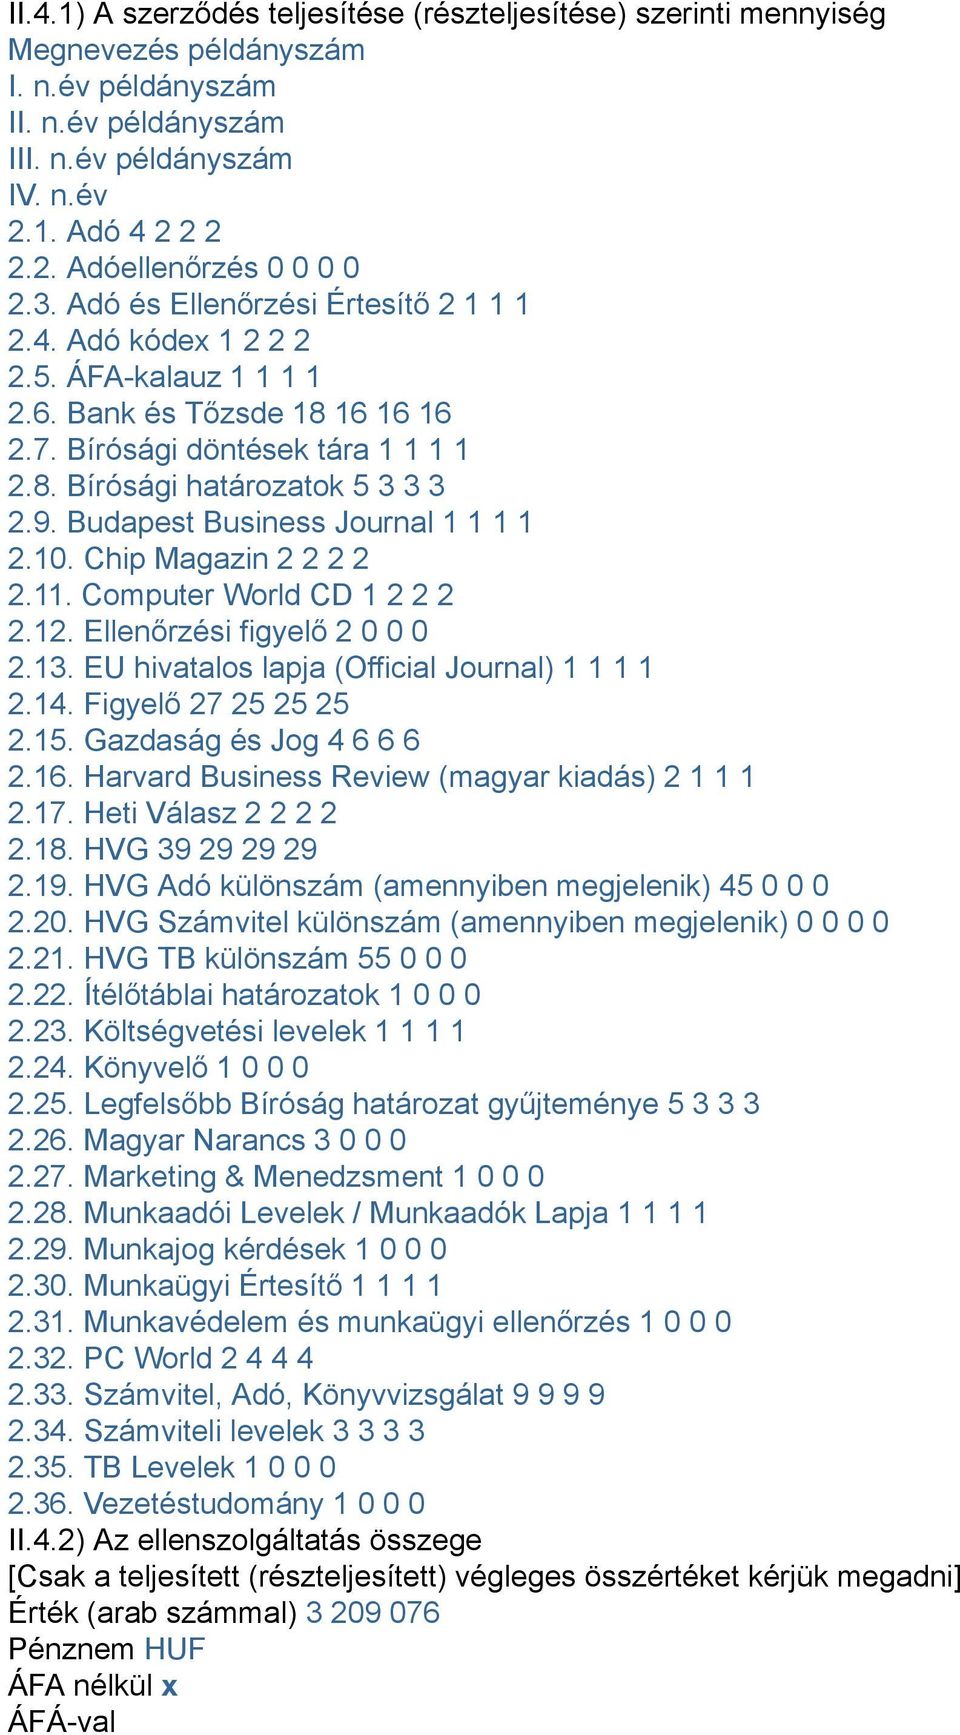 Budapest Business Journal 1 1 1 1 2.10. Chip Magazin 2 2 2 2 2.11. Computer World CD 1 2 2 2 2.12. Ellenőrzési figyelő 2 0 0 0 2.13. EU hivatalos lapja (Official Journal) 1 1 1 1 2.14.